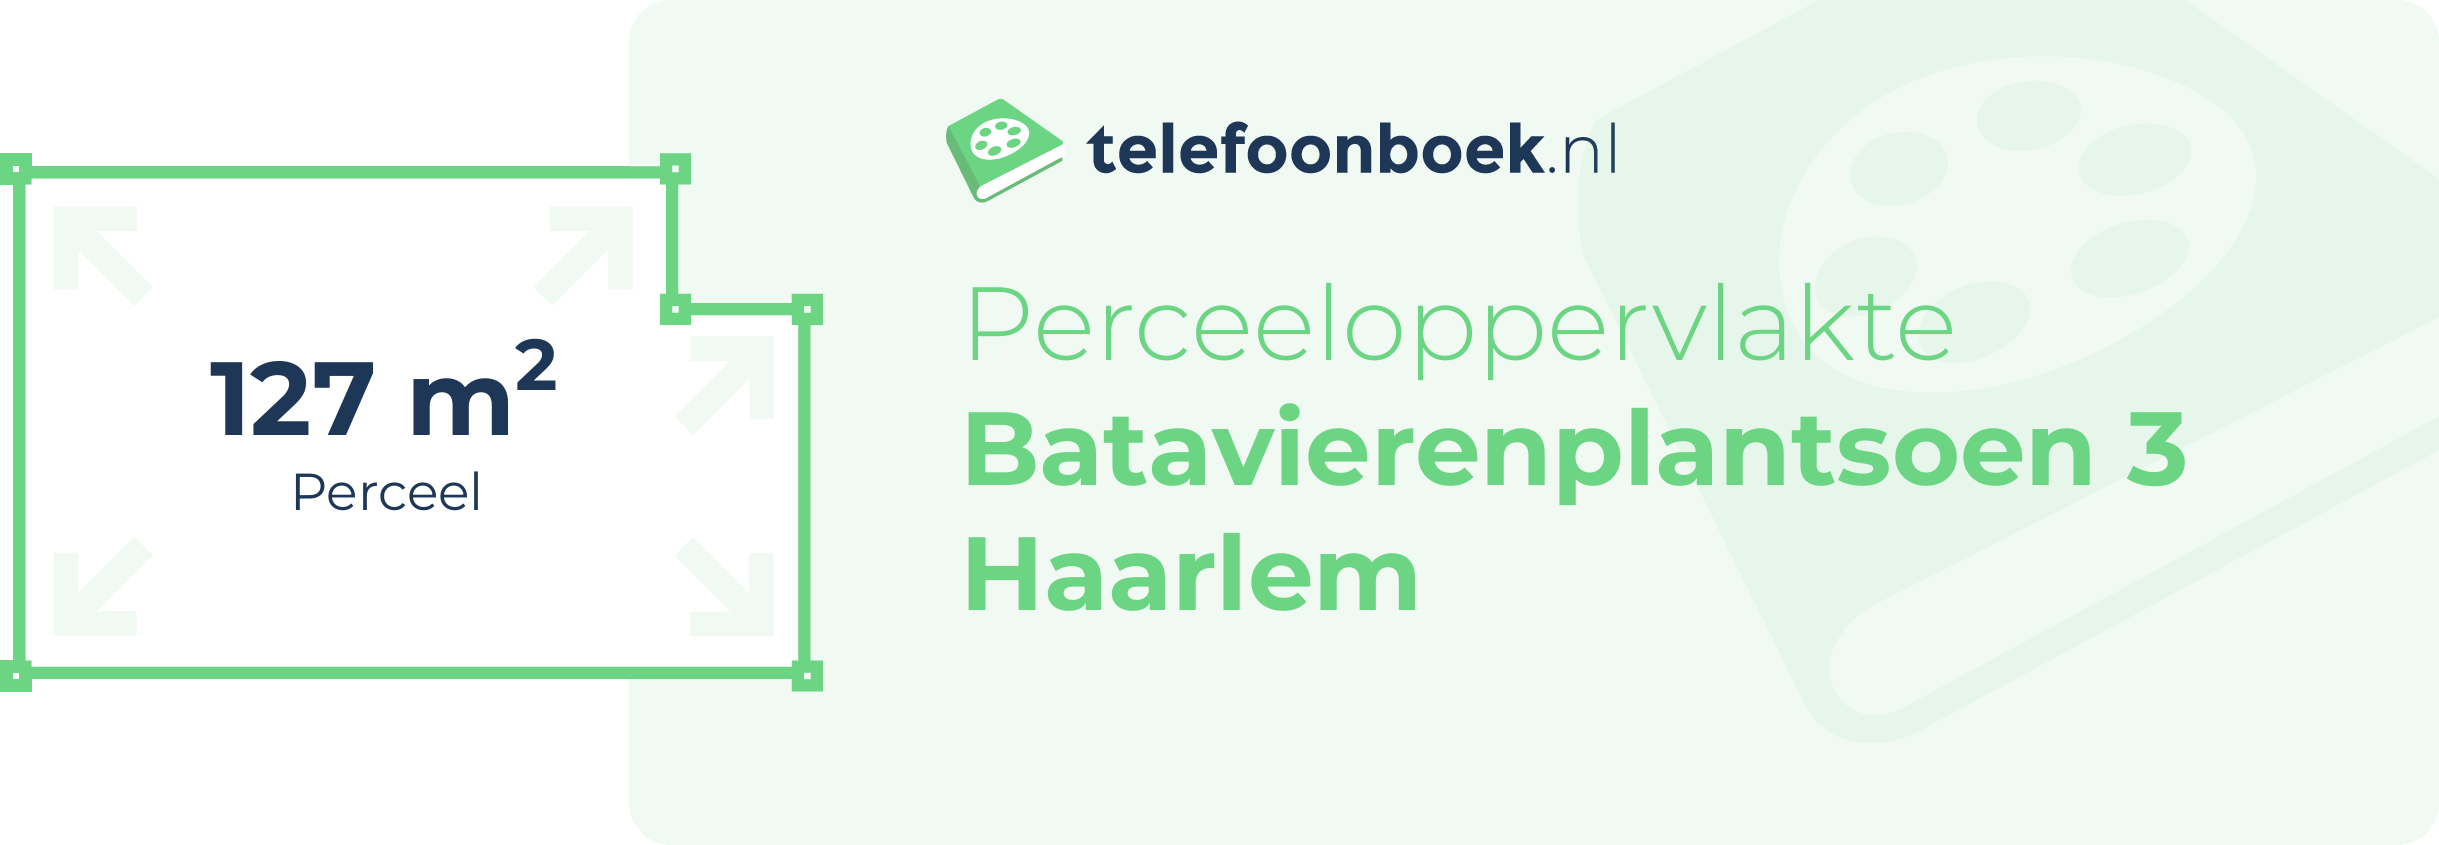 Perceeloppervlakte Batavierenplantsoen 3 Haarlem